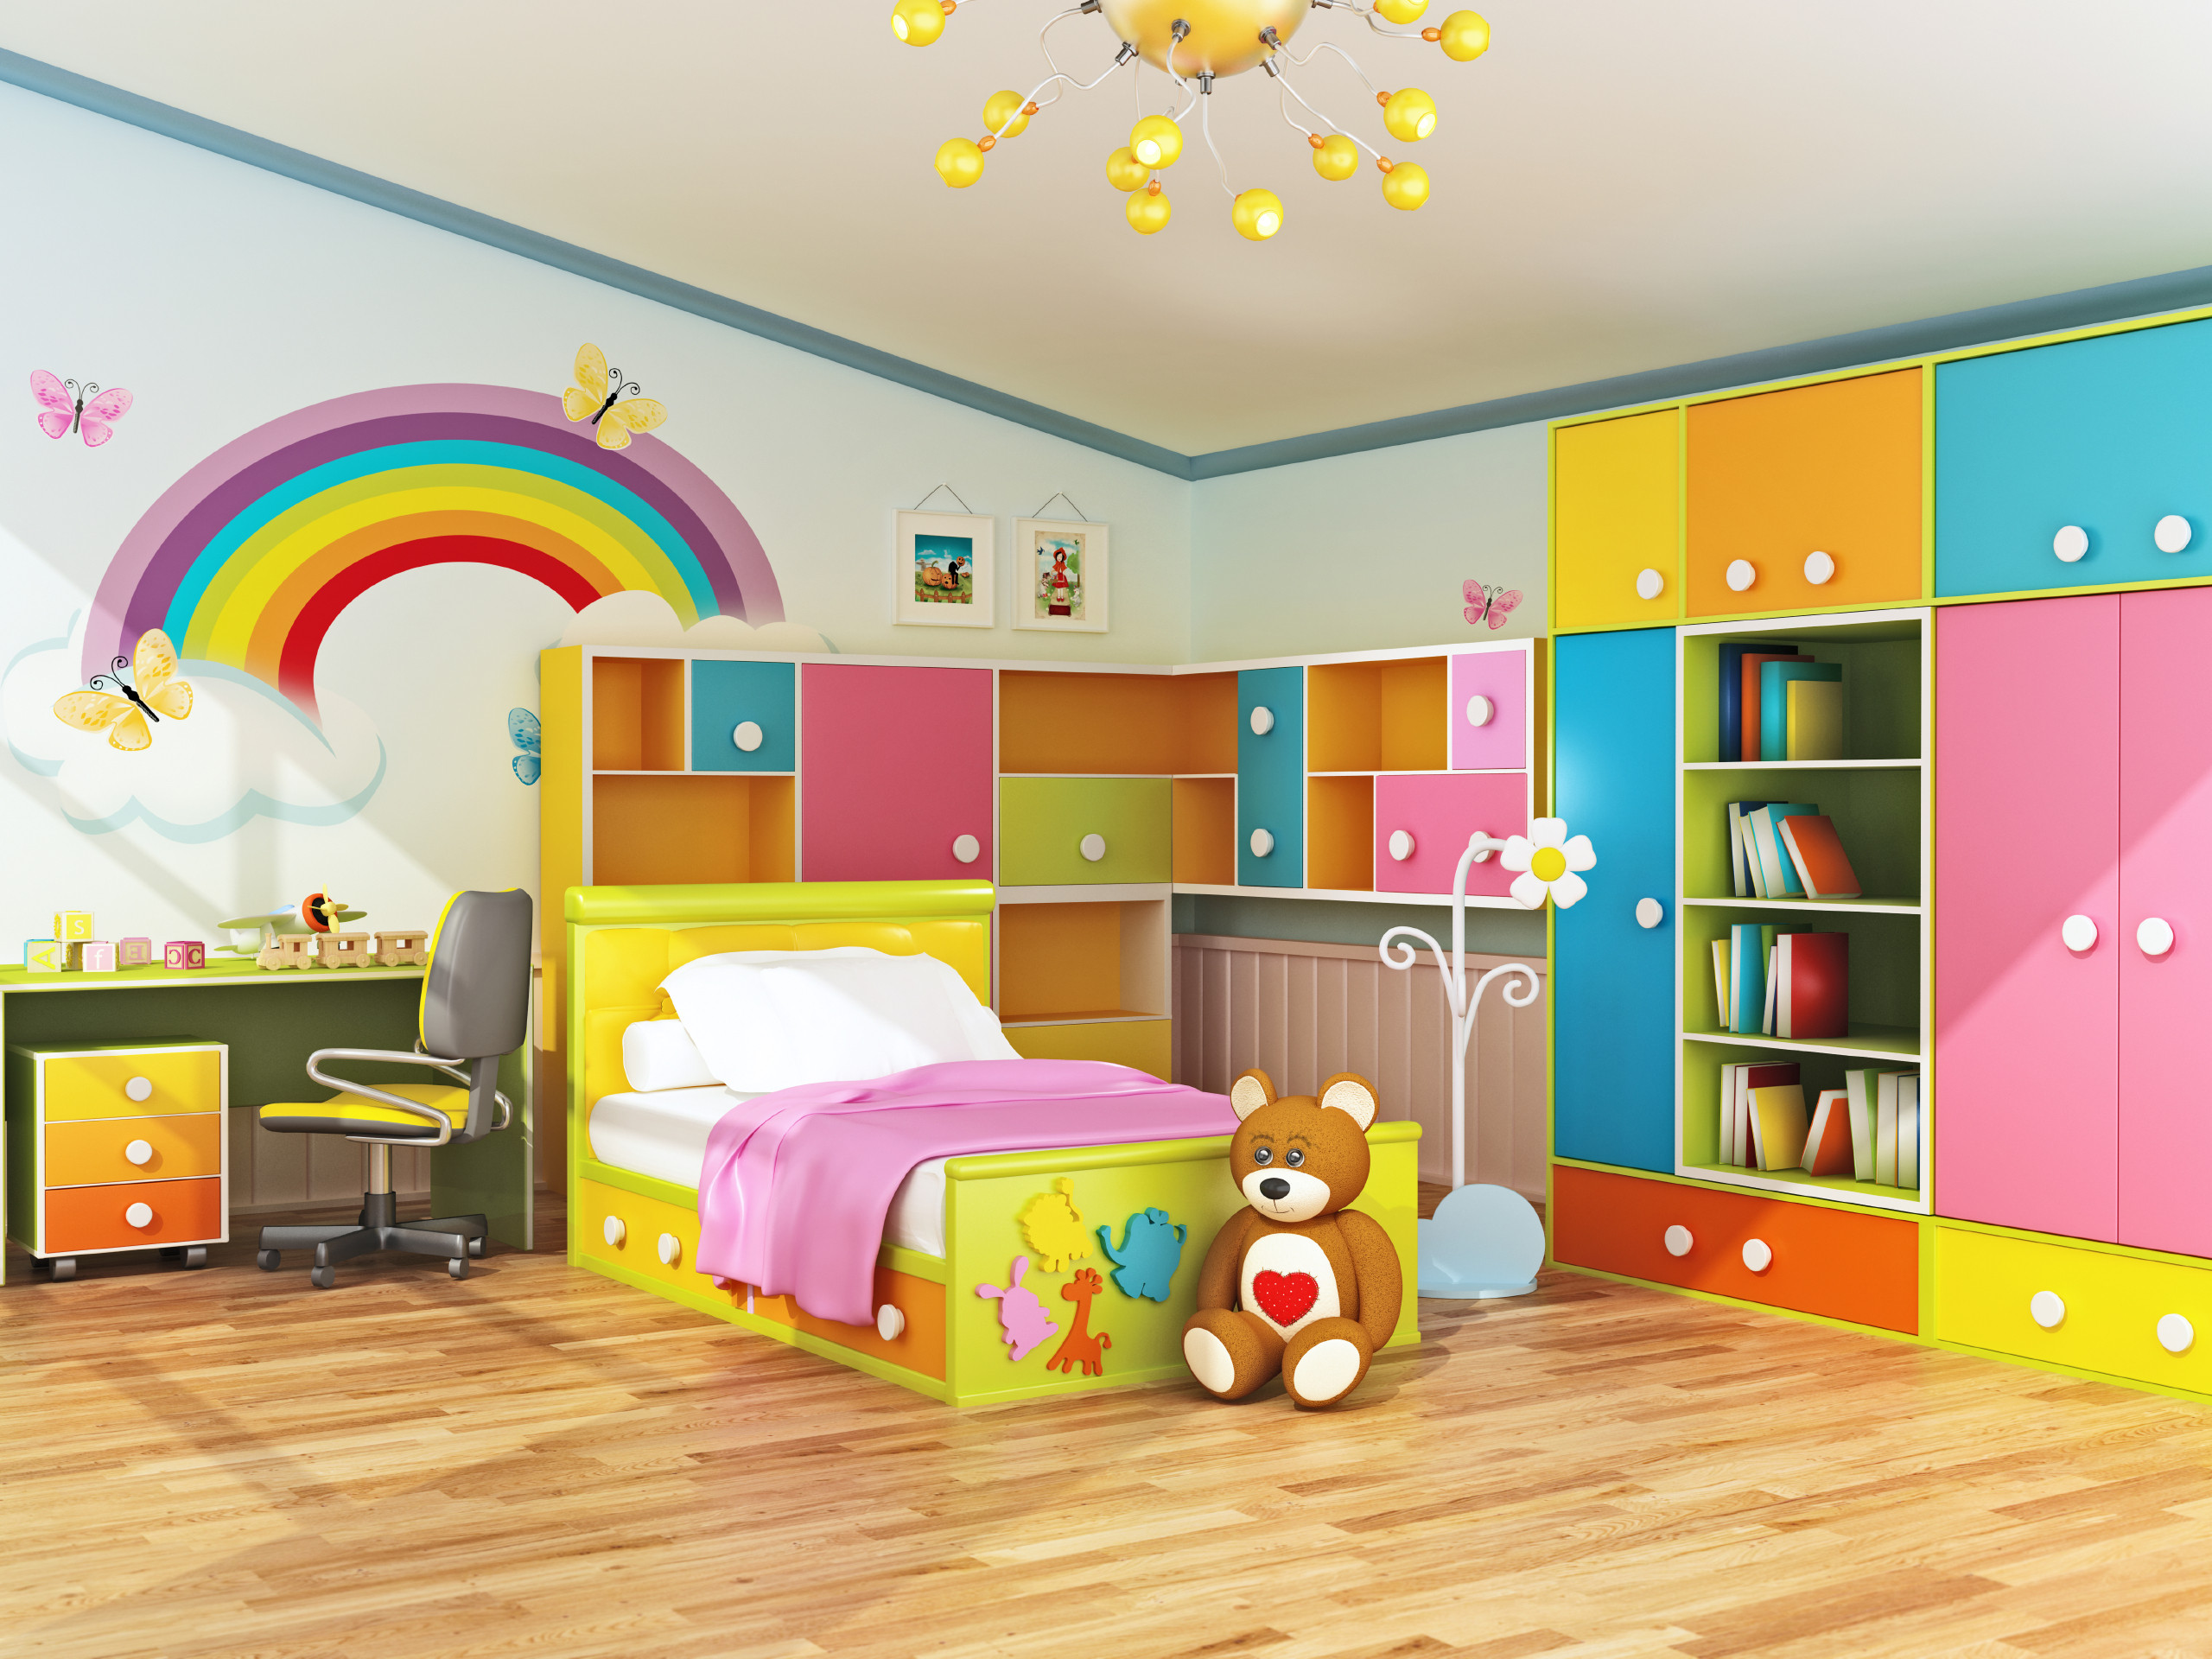 Kids Room Decorations
 Plan Ahead When Decorating Kids Bedrooms